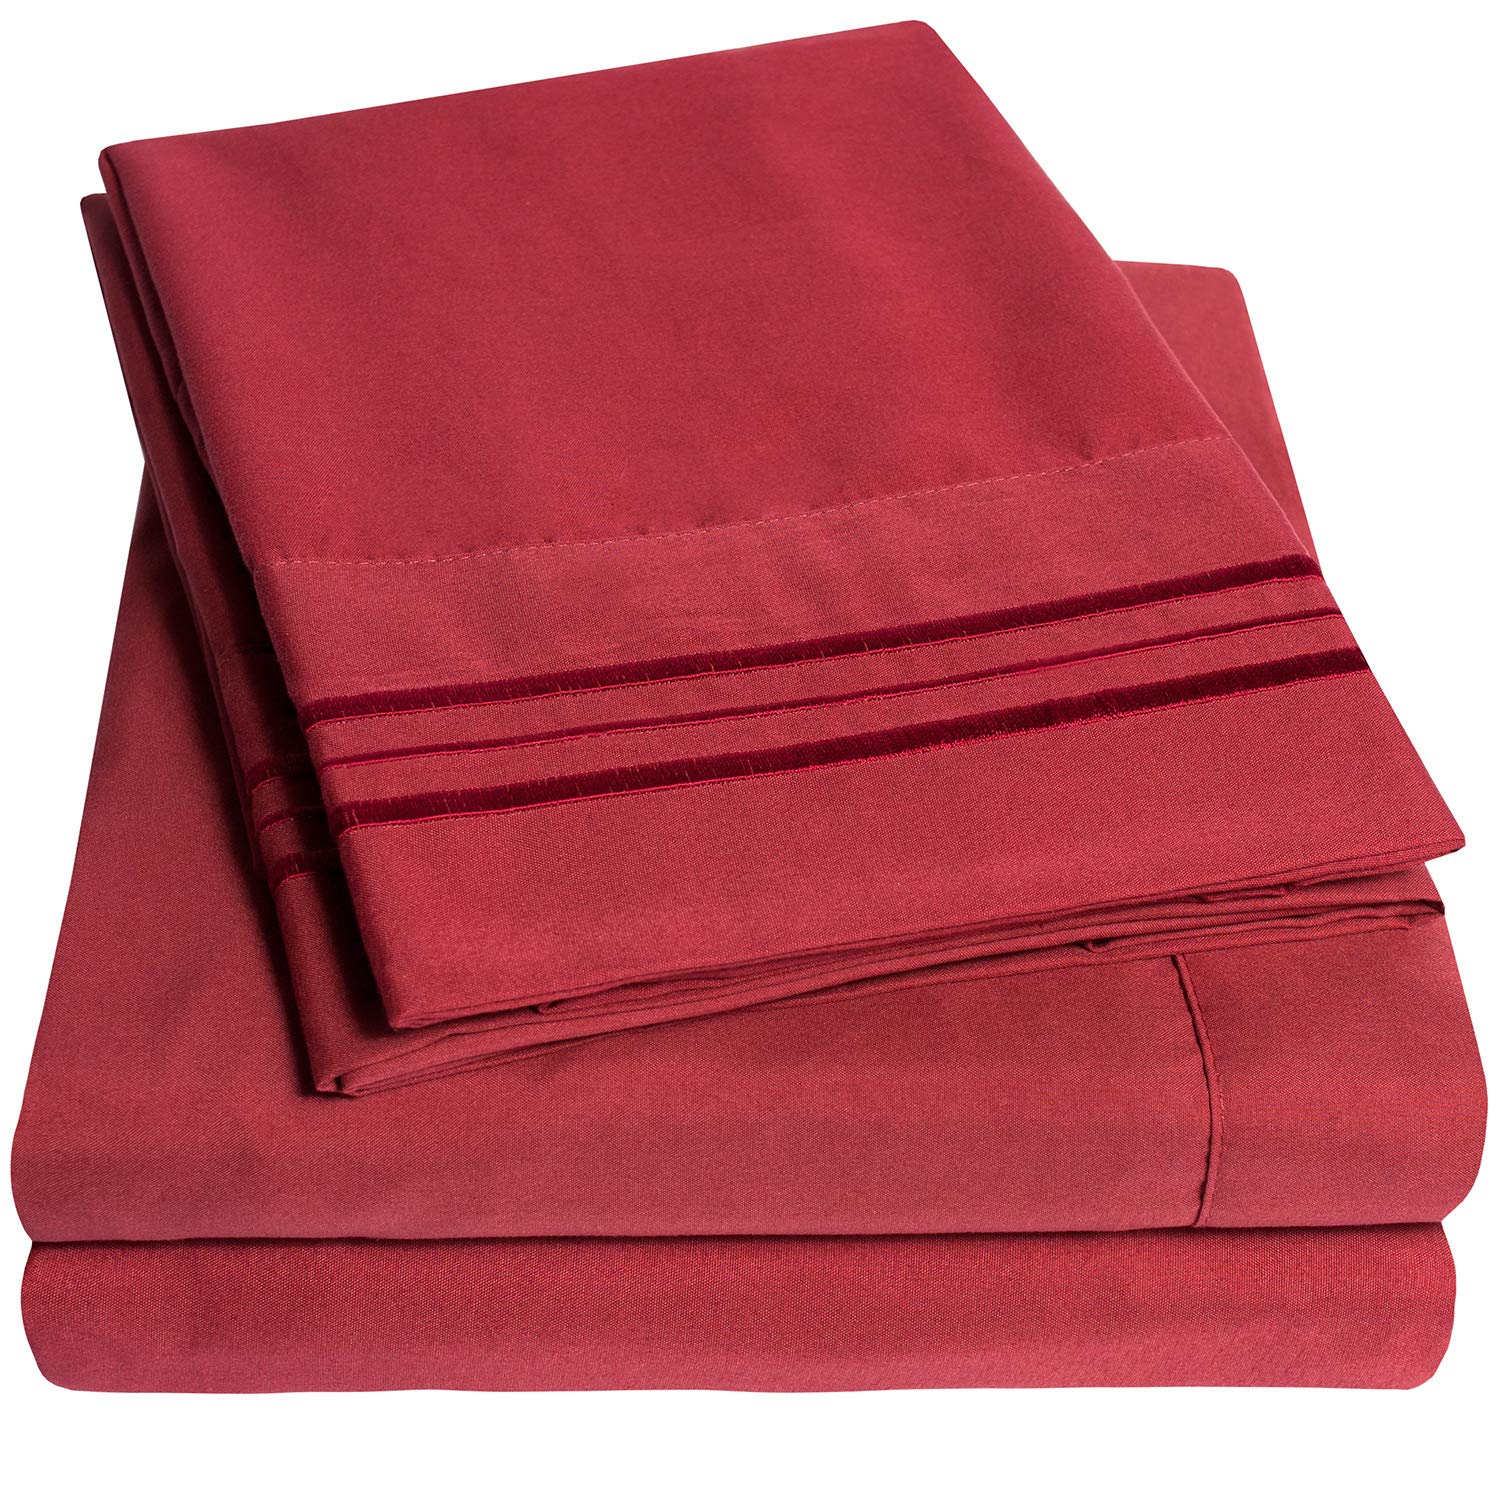 Book Cover 1500 Supreme Collection Bed Sheet Set - Extra Soft, Elastic Corner Straps, Deep Pockets, Wrinkle & Fade Resistant Sheets Set, Luxury Hotel Bedding, King, Burgundy